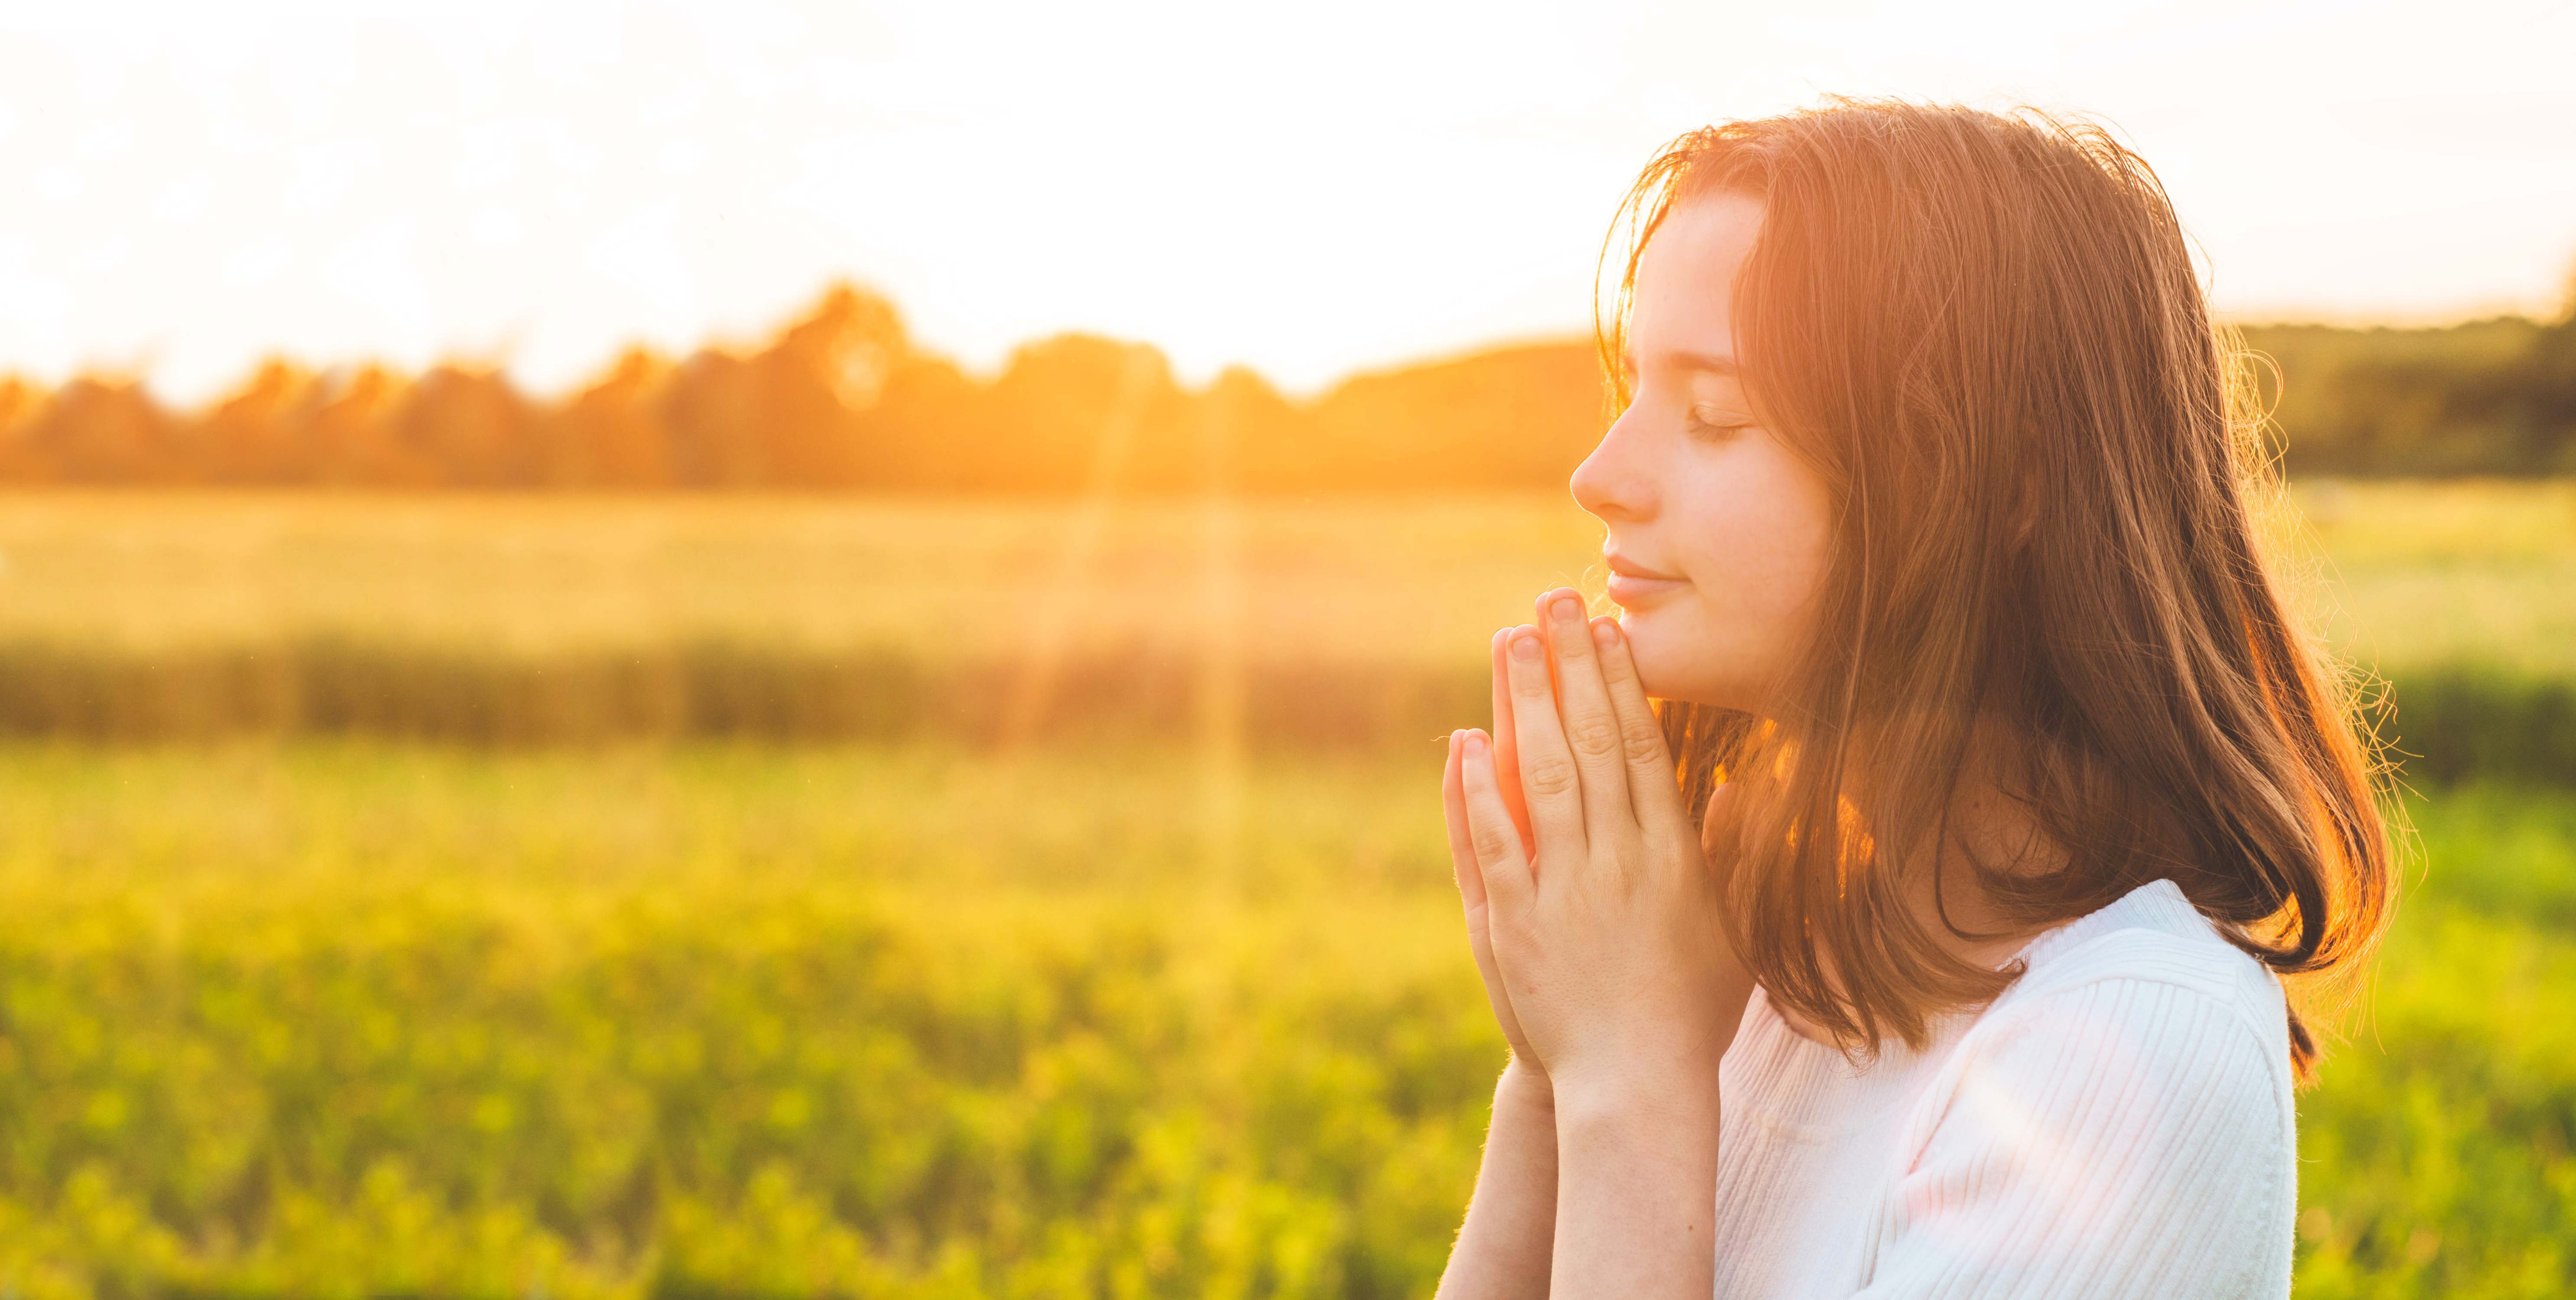 How Should You Pray? (Father Simon Says)